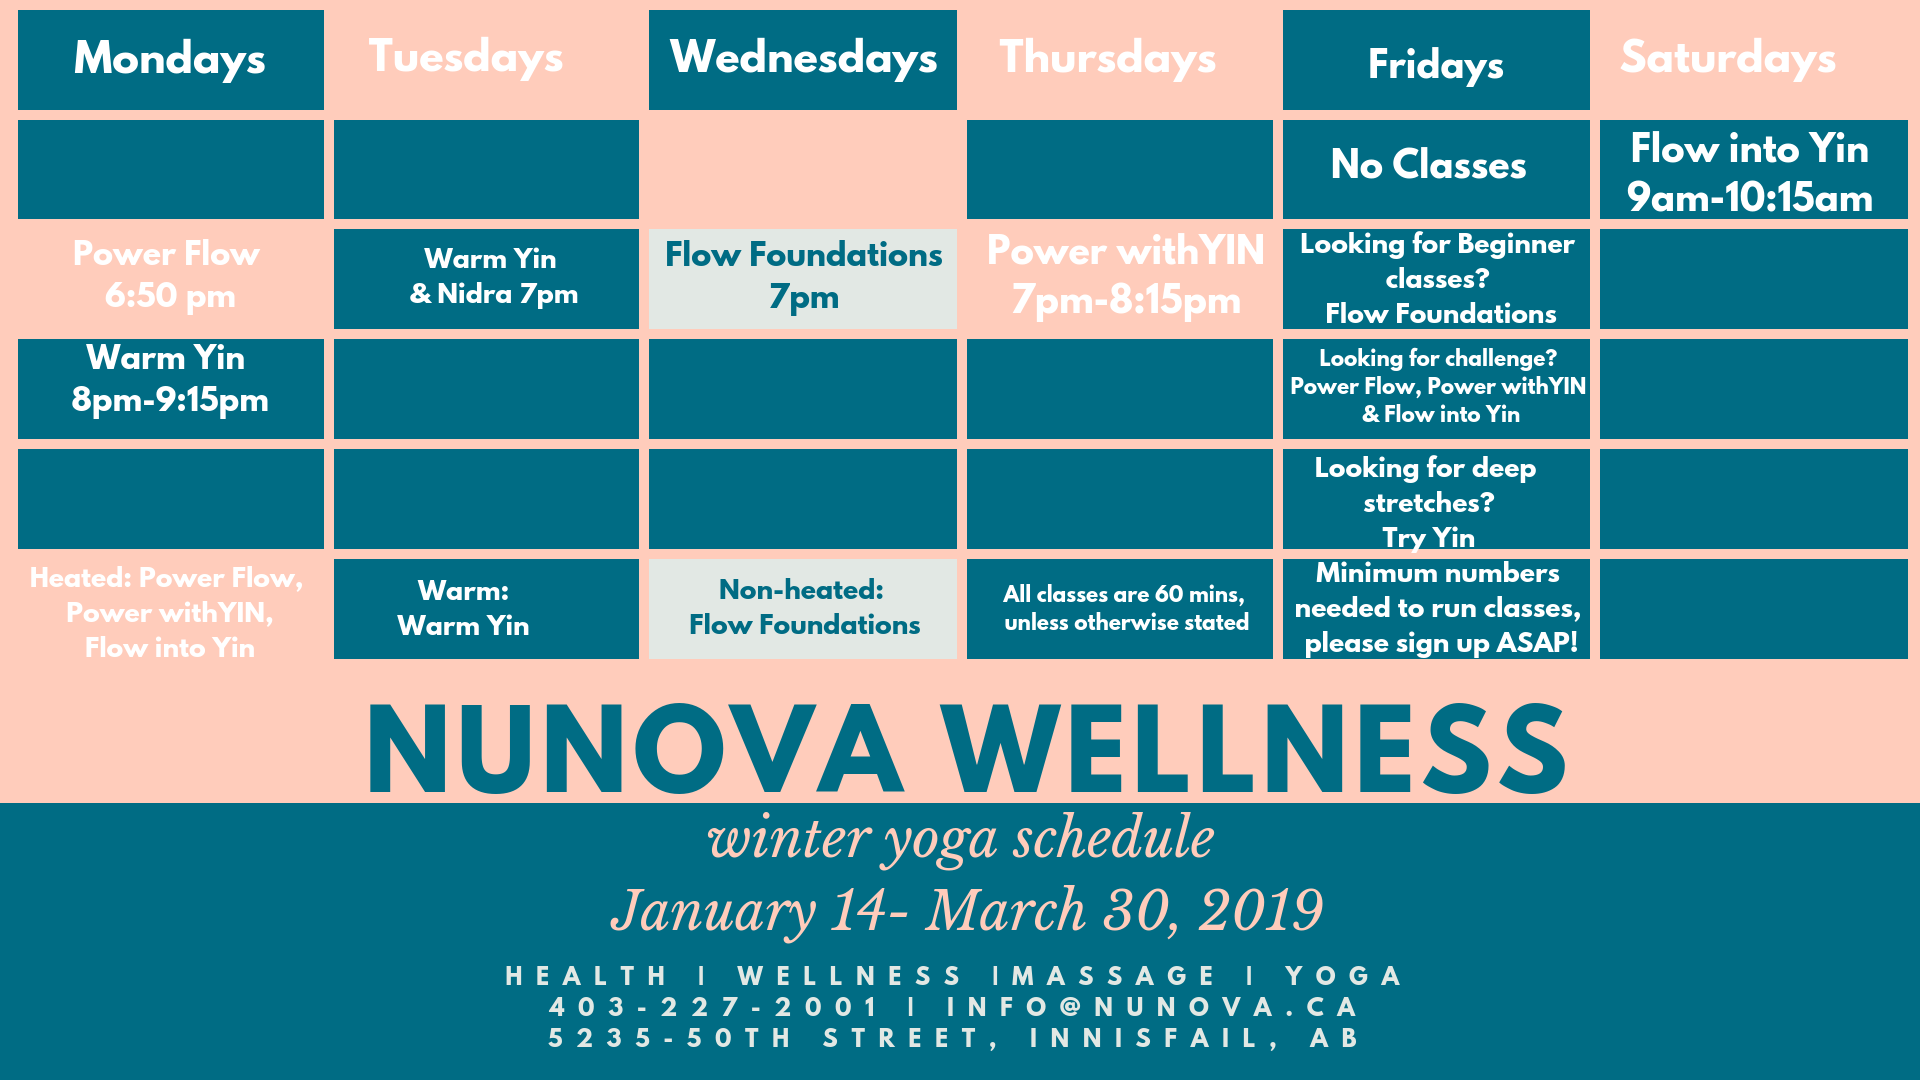 earthview yoga schedule